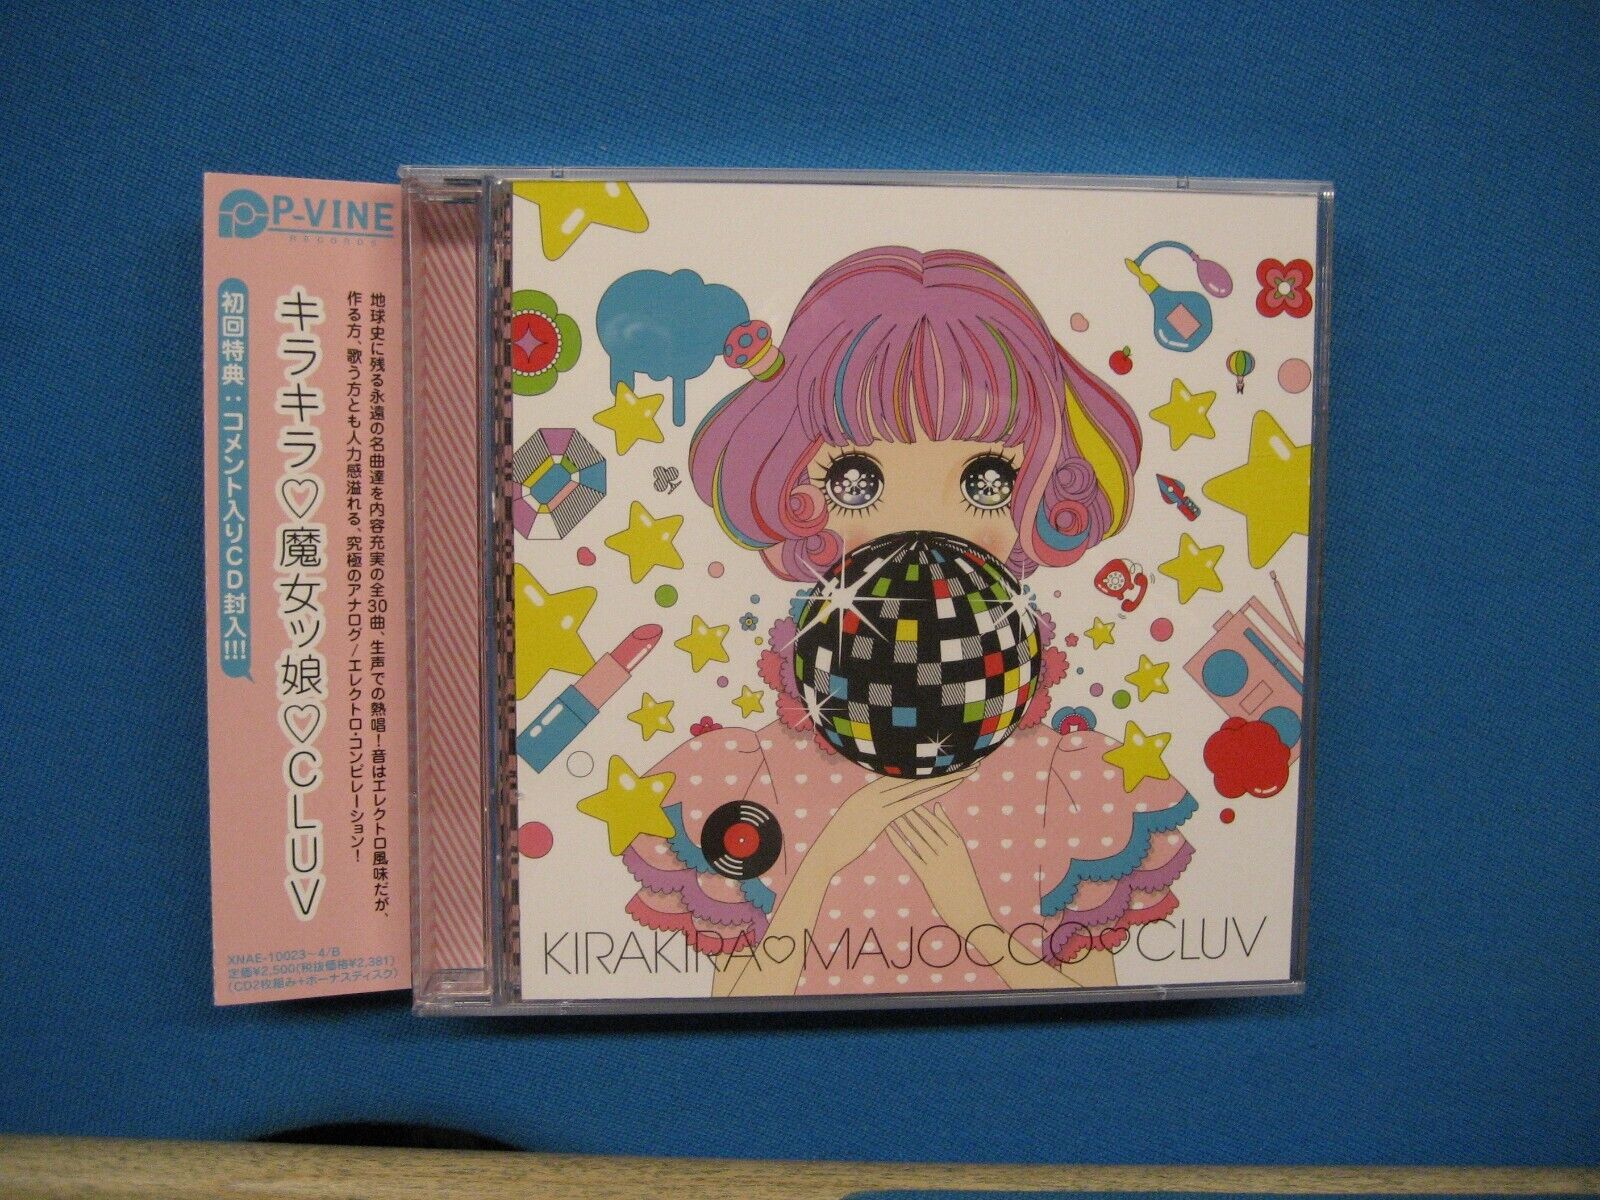 Anime Cd Kirakira Majokko Cluv 3 CD\'S TOTAL. ALL EXCELLENT CONDITION.